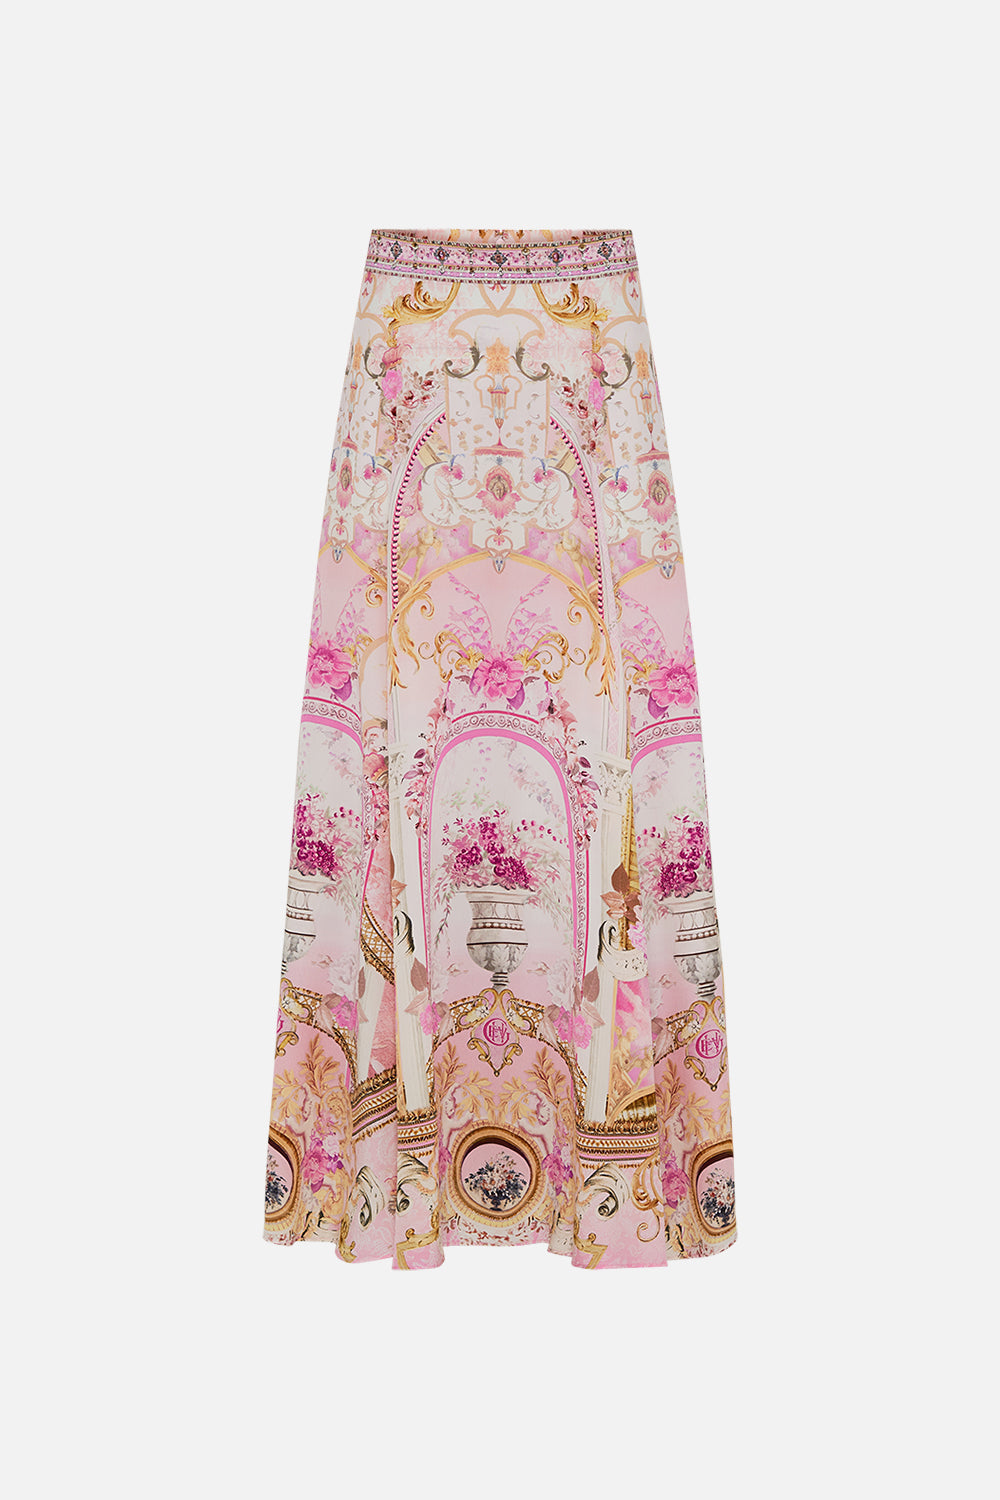 CAMILLA pink maxi skirt in Fresco Fairytale print